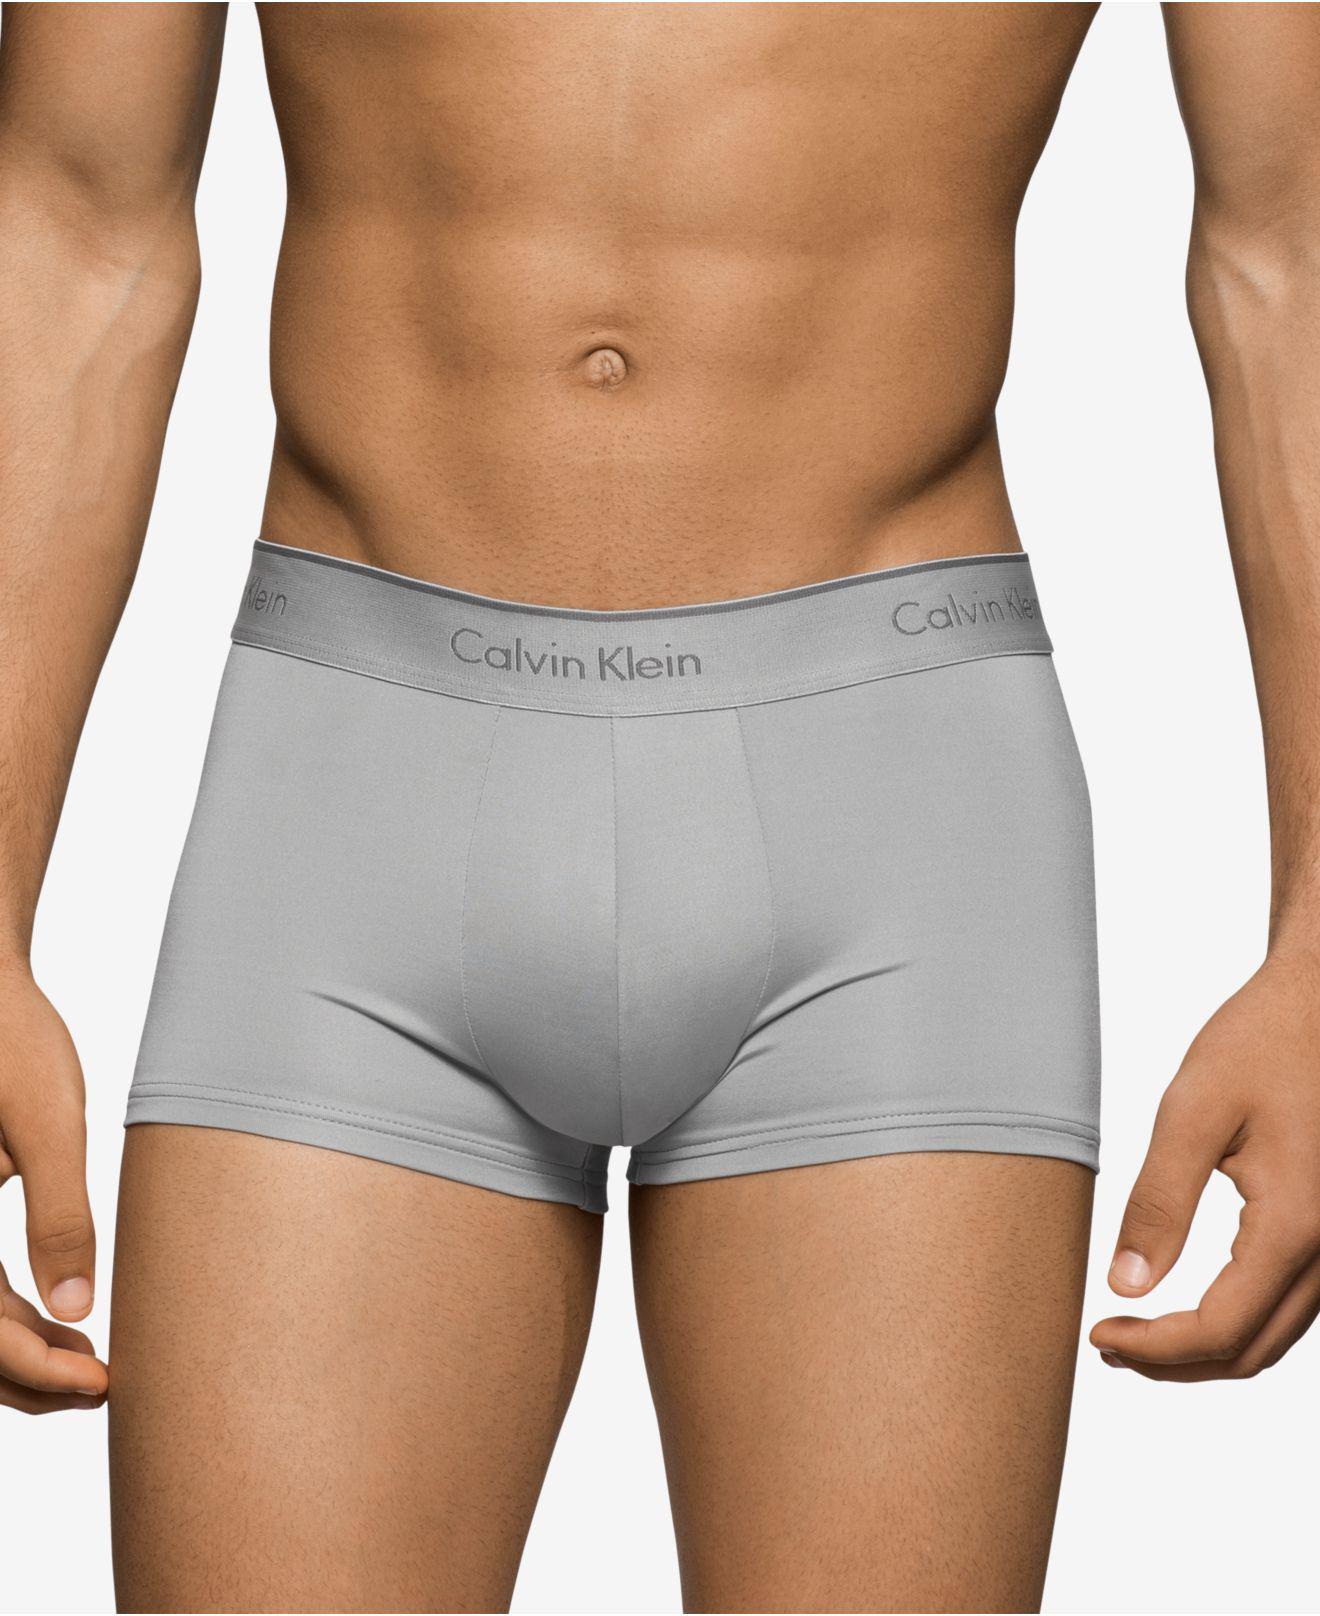 Calvin Klein Nb1289 Microfiber Stretch Low Rise Trunks in Gray for Men